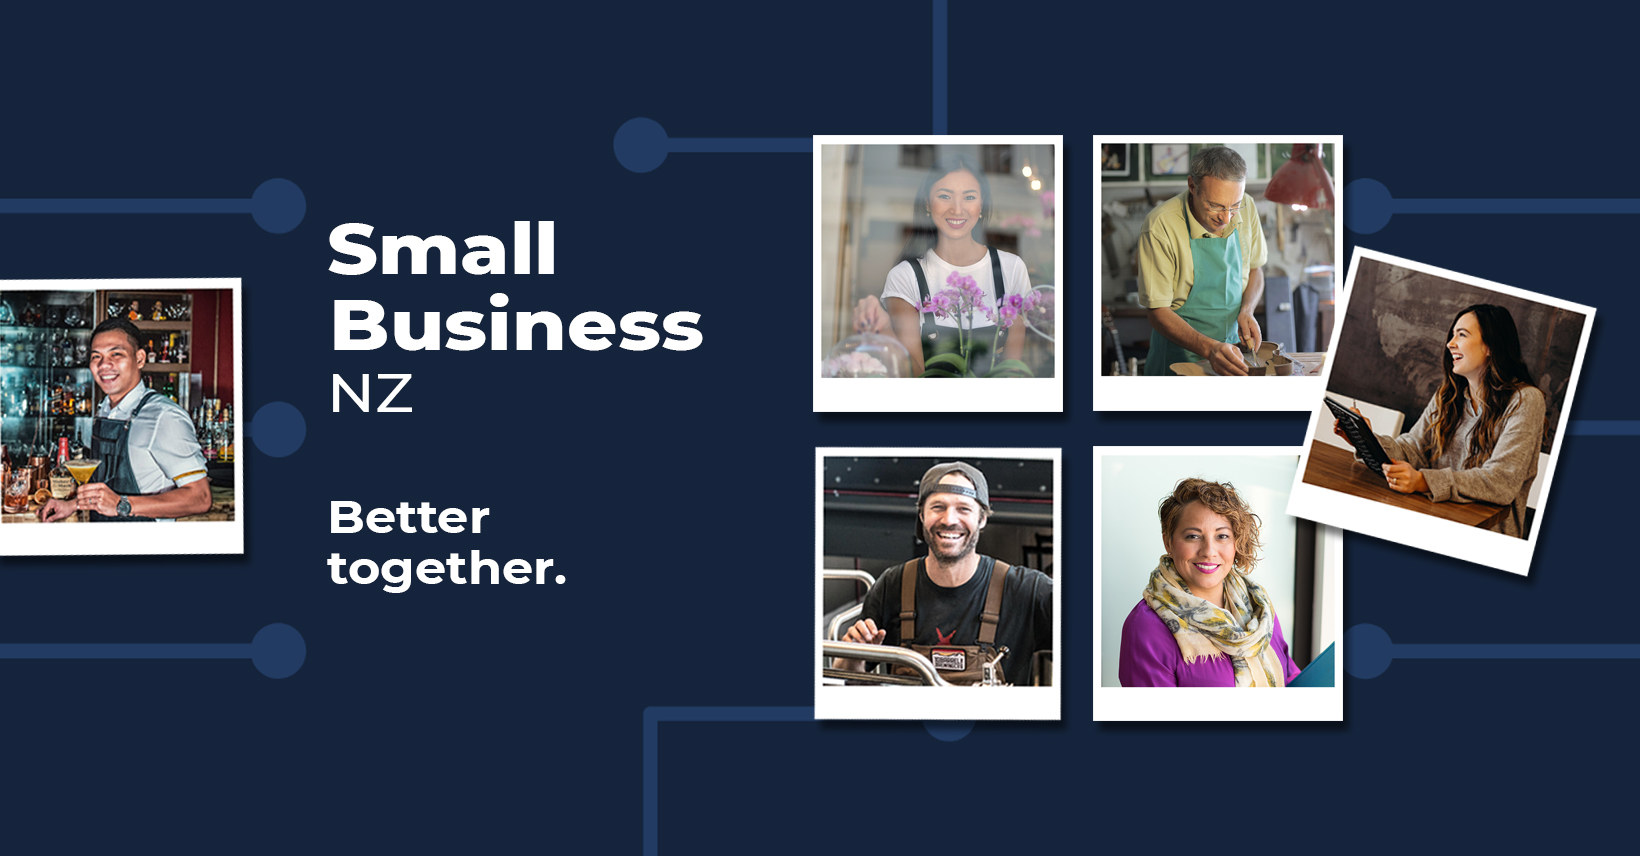 Small Business NZ